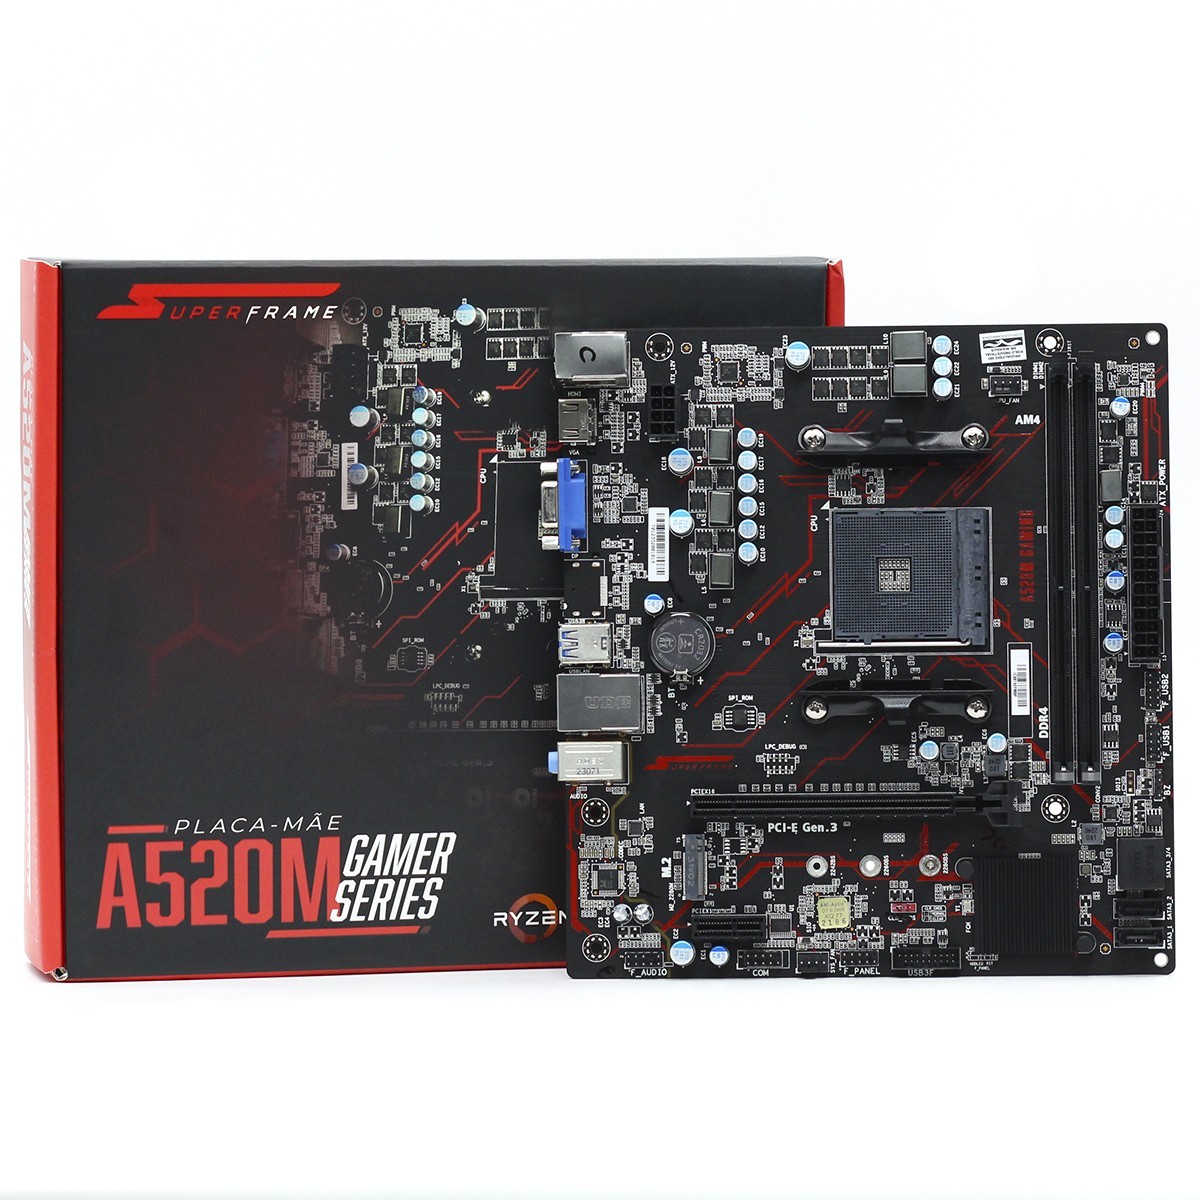 Kit Upgrade, Placa Mãe SuperFrame A520M Gaming, AMD Ryzen 3 4100, Memória DDR4 16GB (2X8GB)